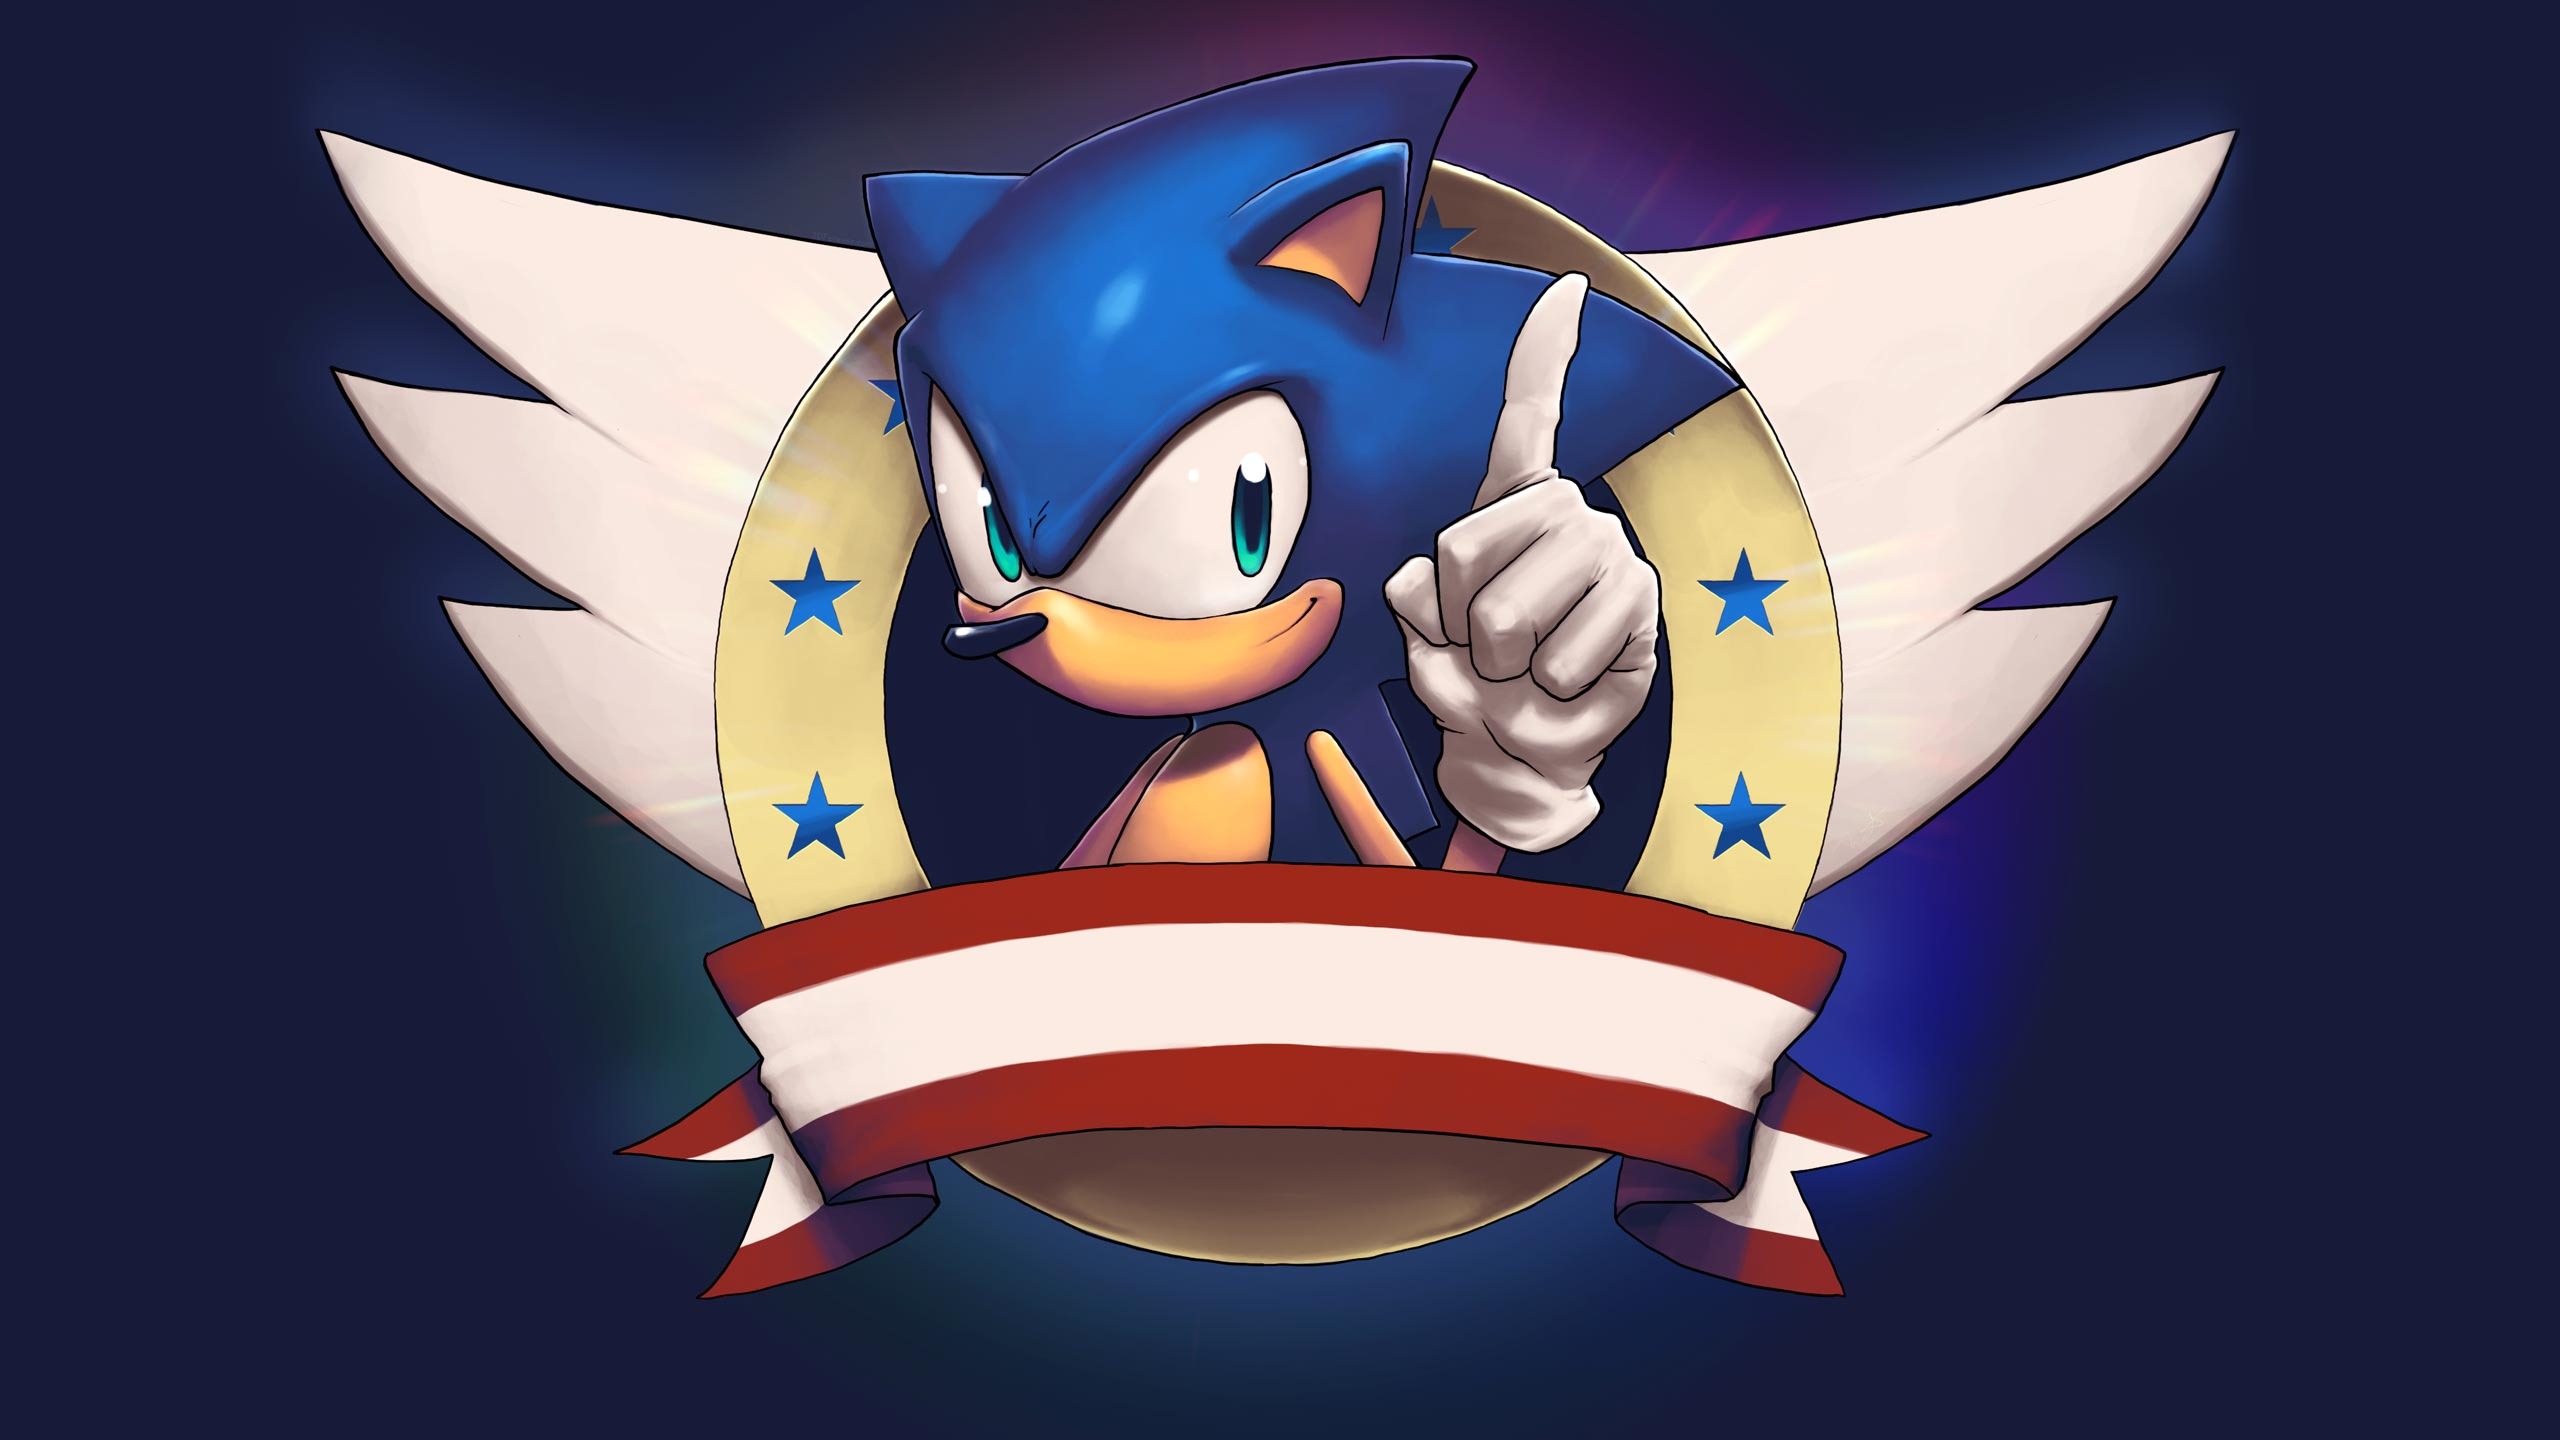 Sonic The Hedgehog wallpaper 26894